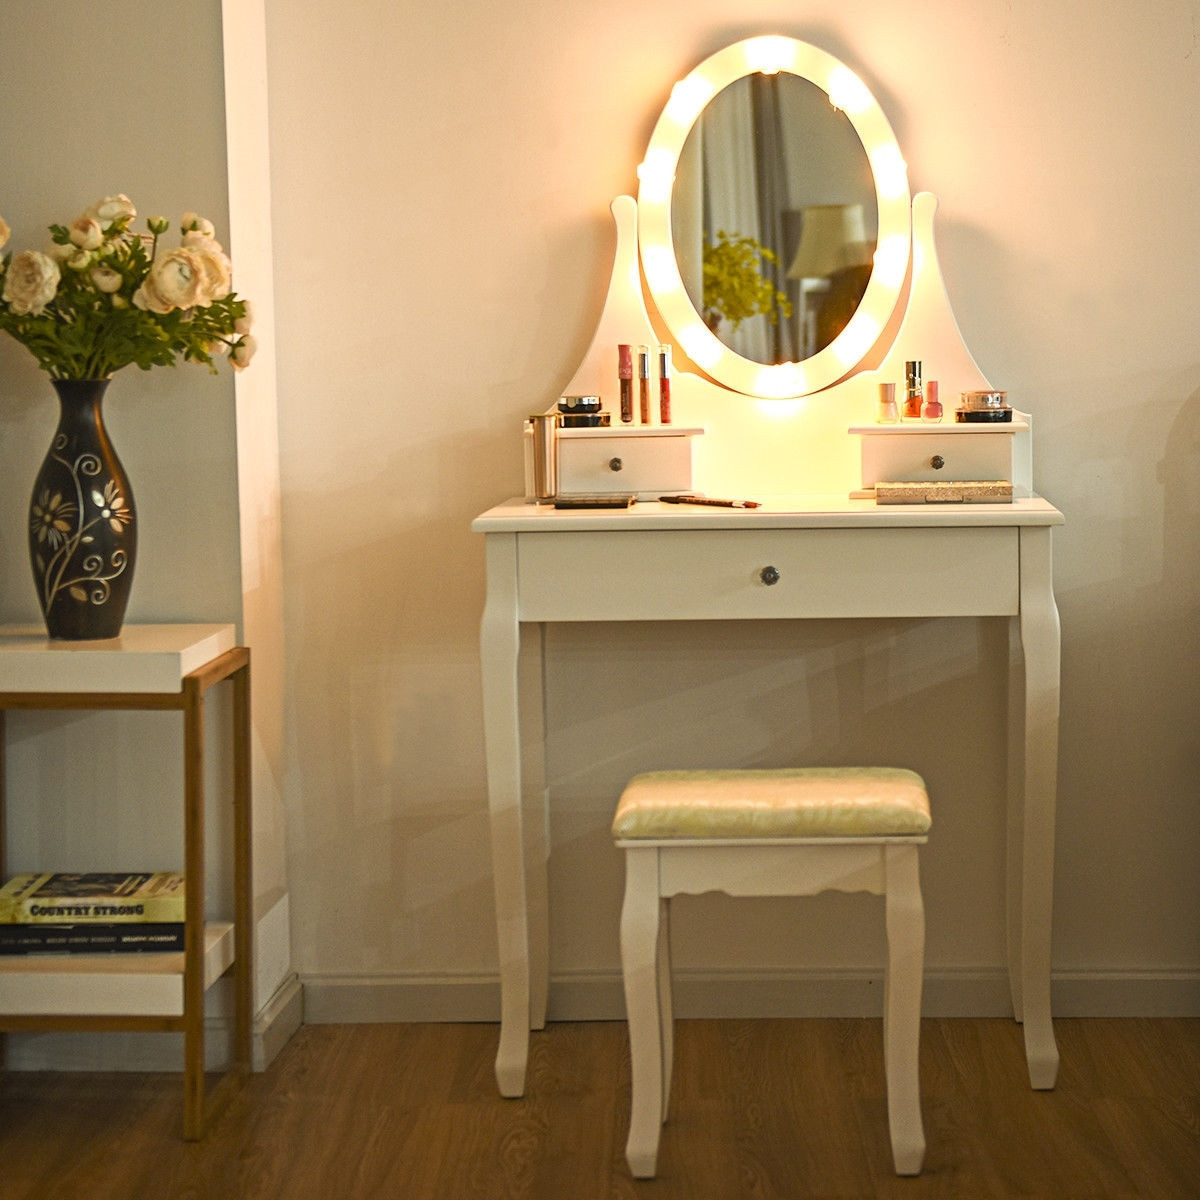 3 Drawers Lighted Mirror Vanity Makeup Dressing Table Stool Set